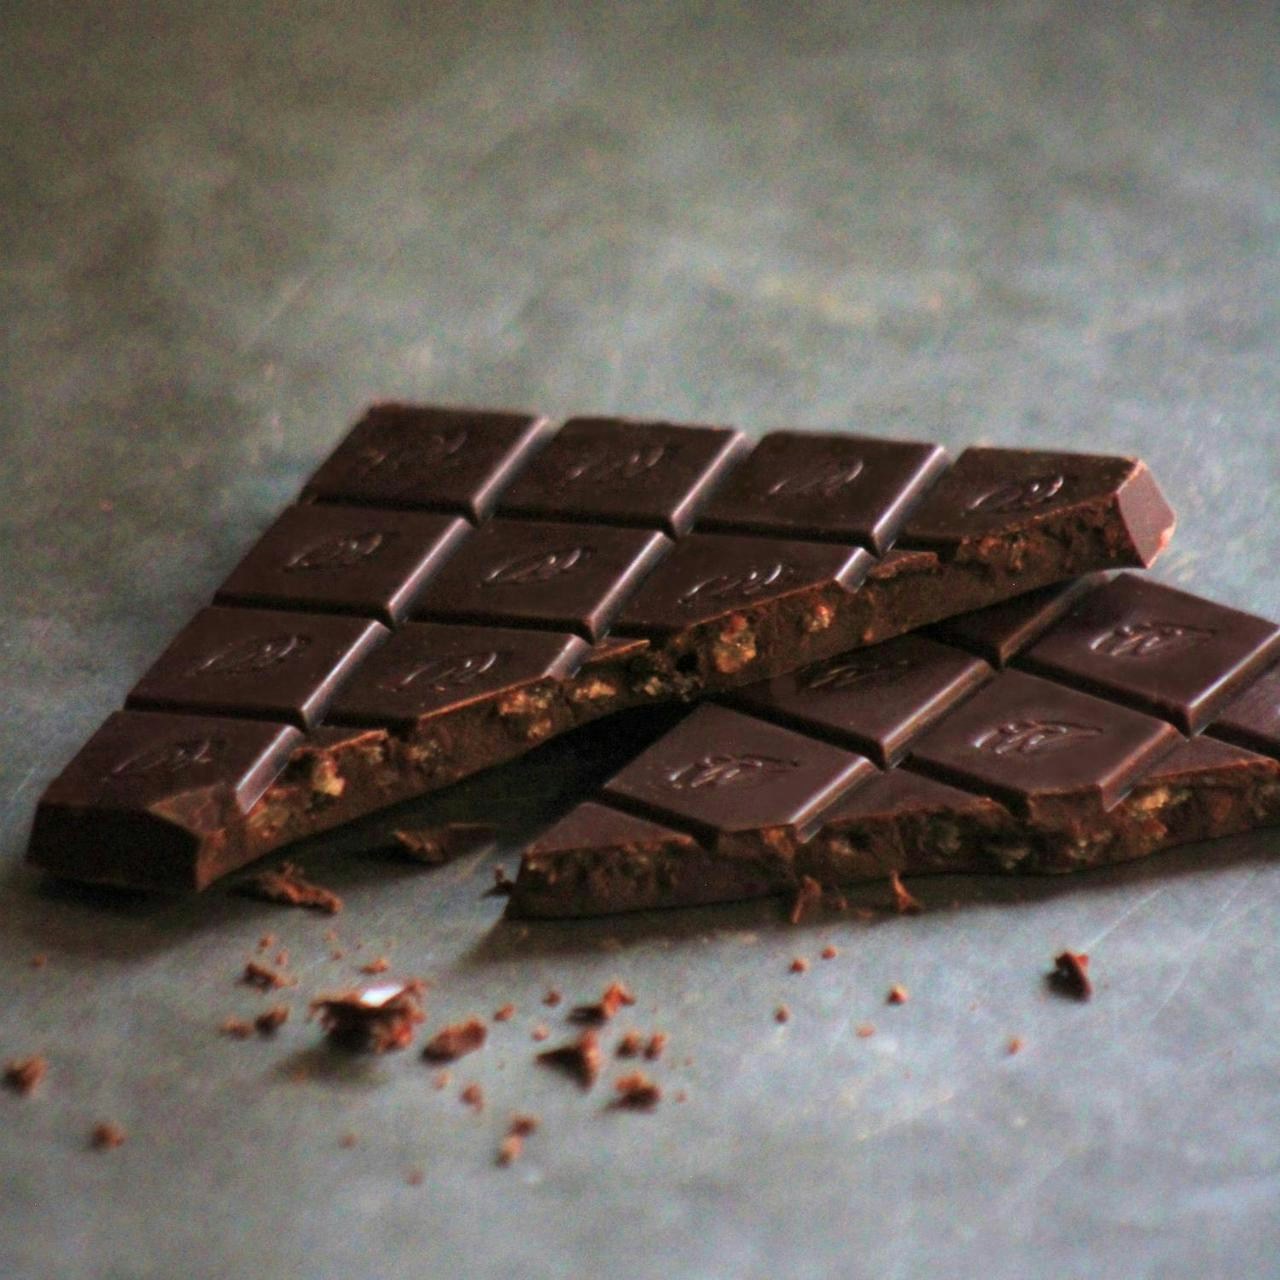 Willie’s Cacao Pistachio & Date Dark Chocolate, £3